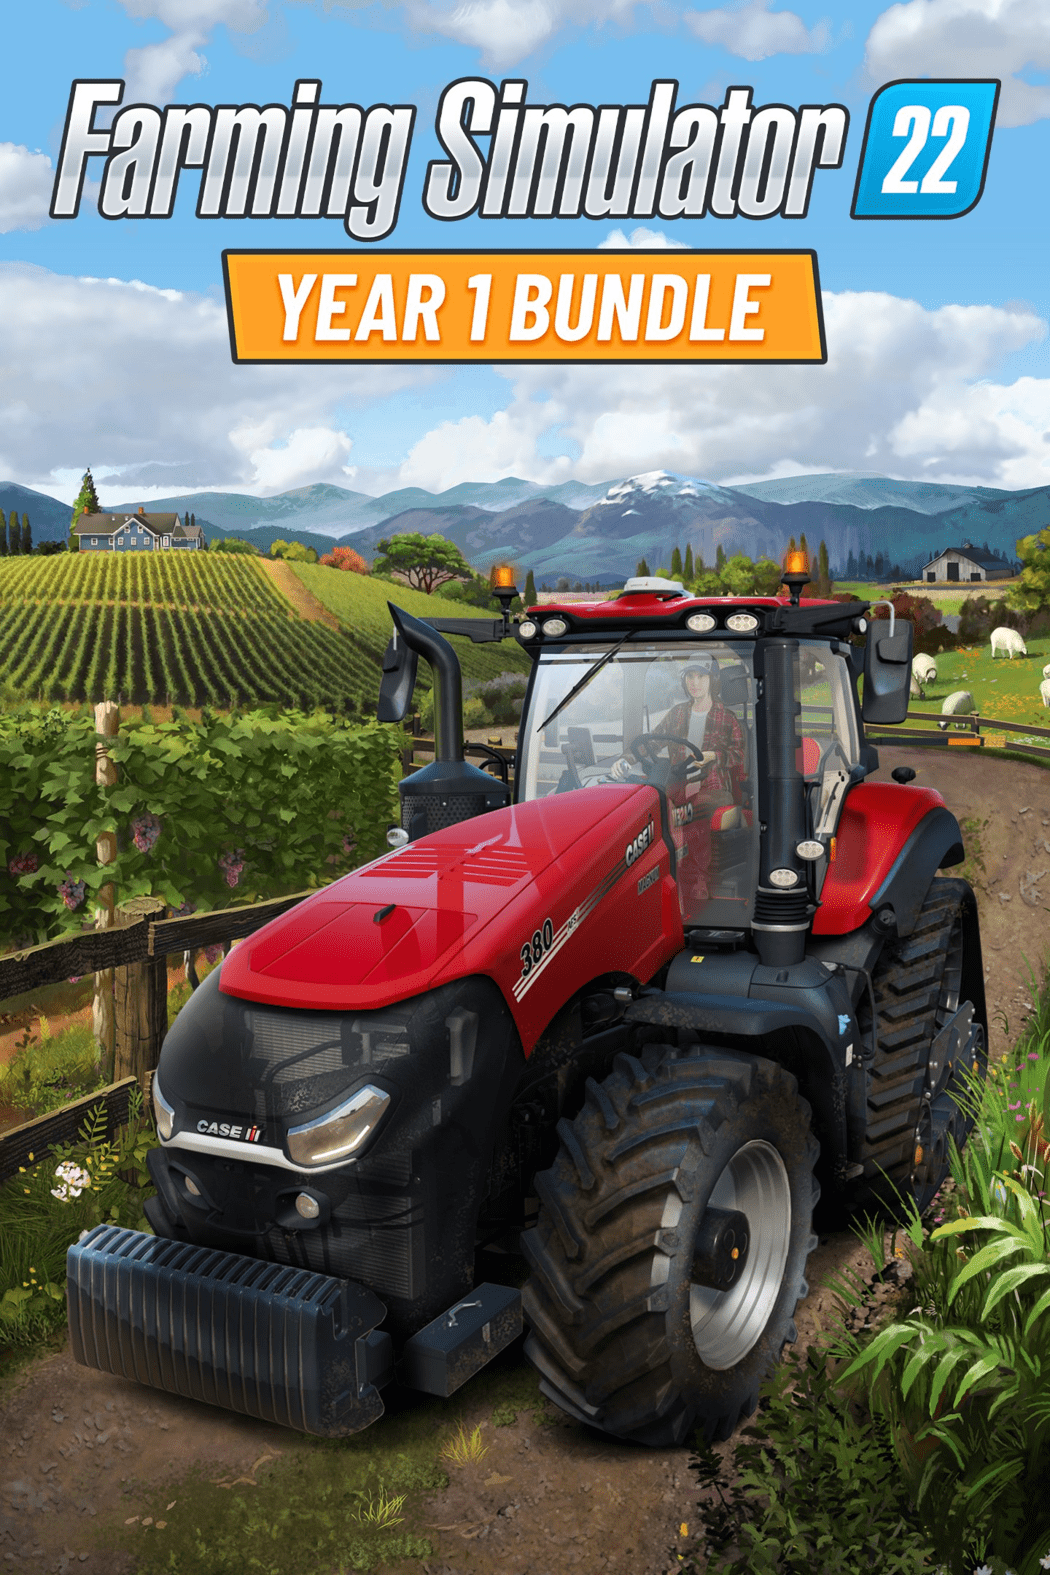 Farming Simulator 22 - Year 1 Bundle Steam Key for PC and Mac - Buy now